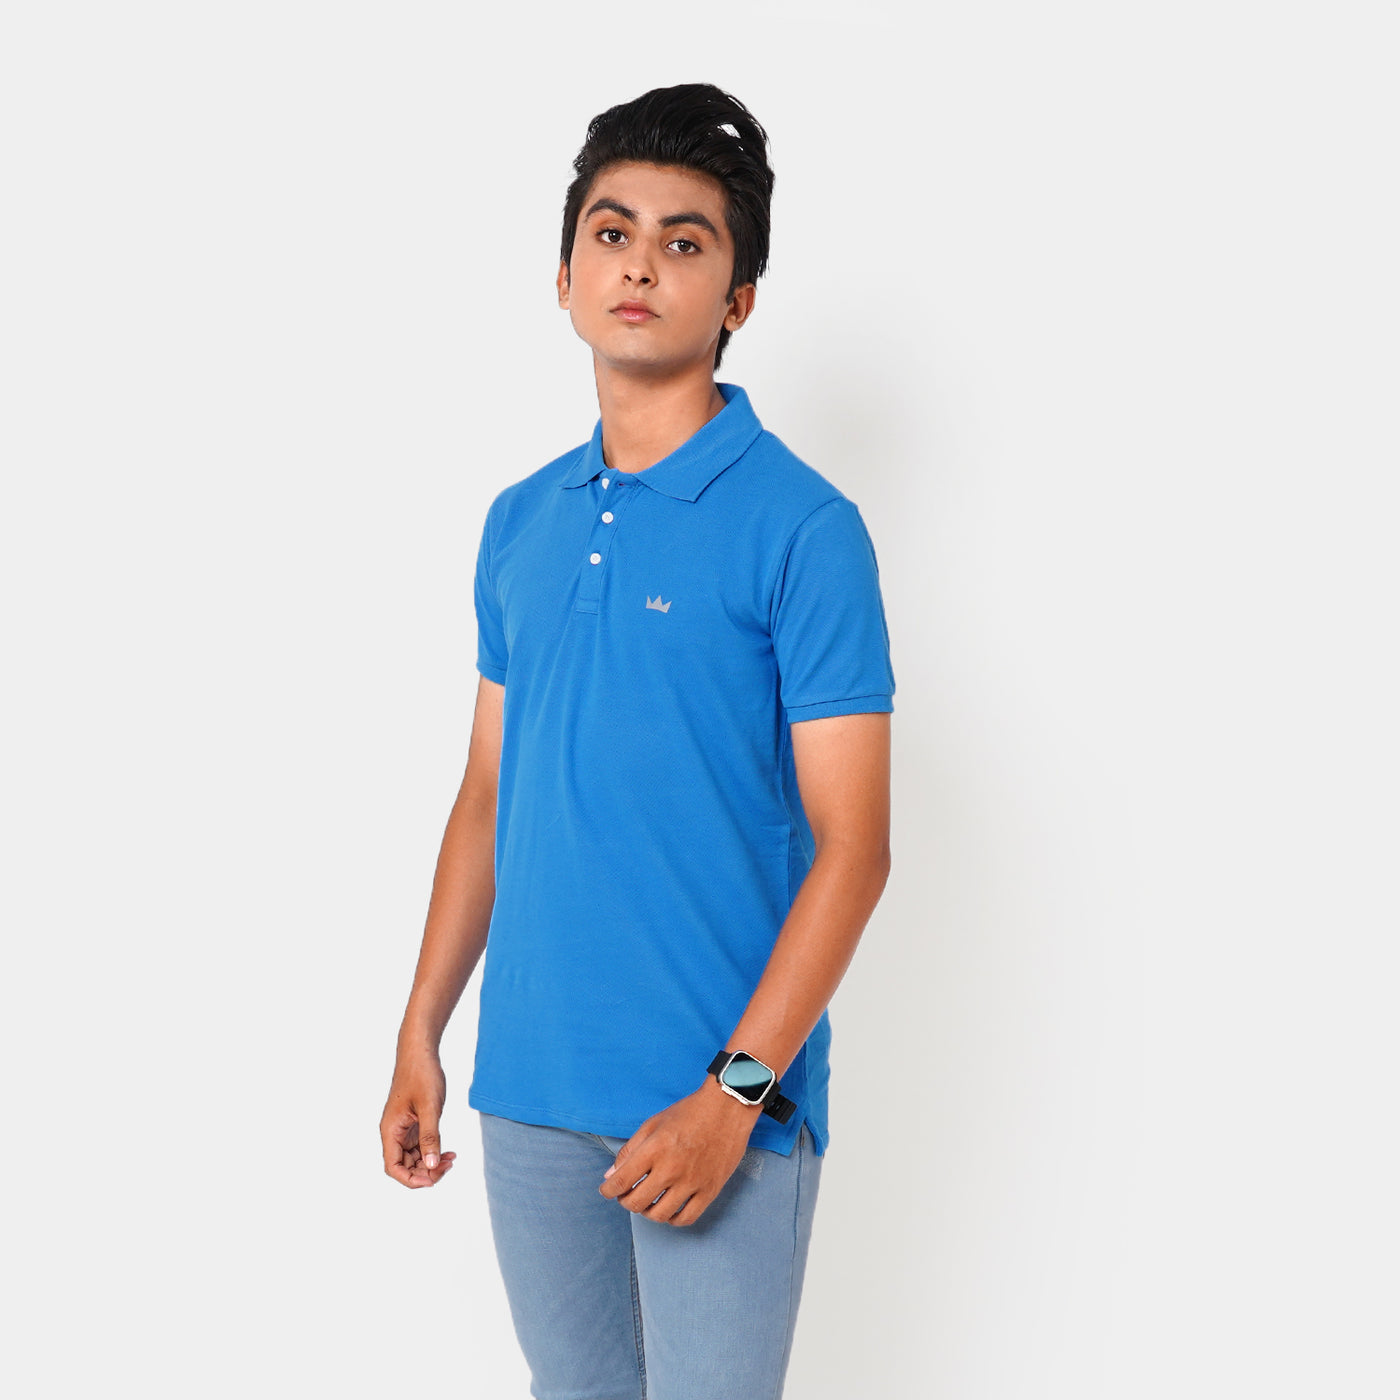 Teens Boys Polo T-Shirt Basic - INDIGO BLUE